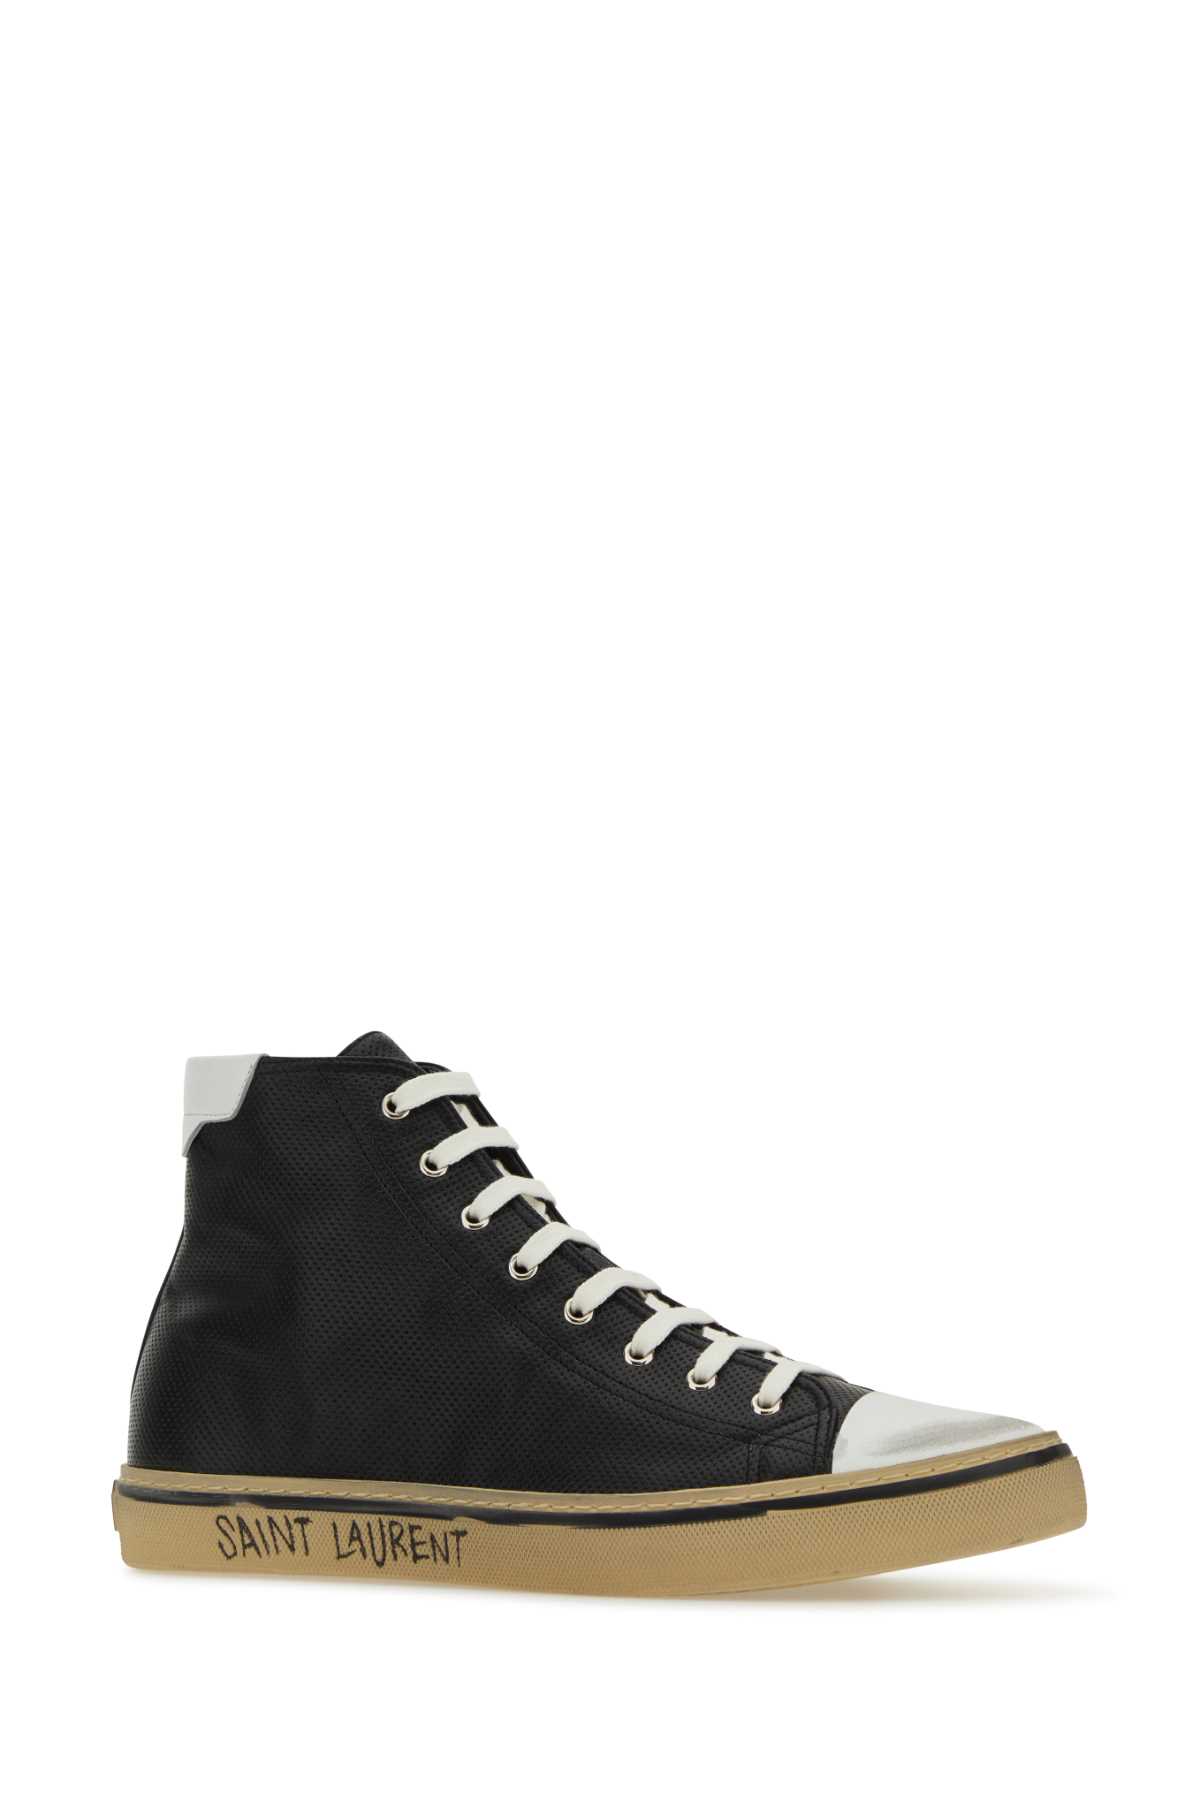 Saint Laurent Black Leather Malibã¹ Sneakers In Neroblancoptique